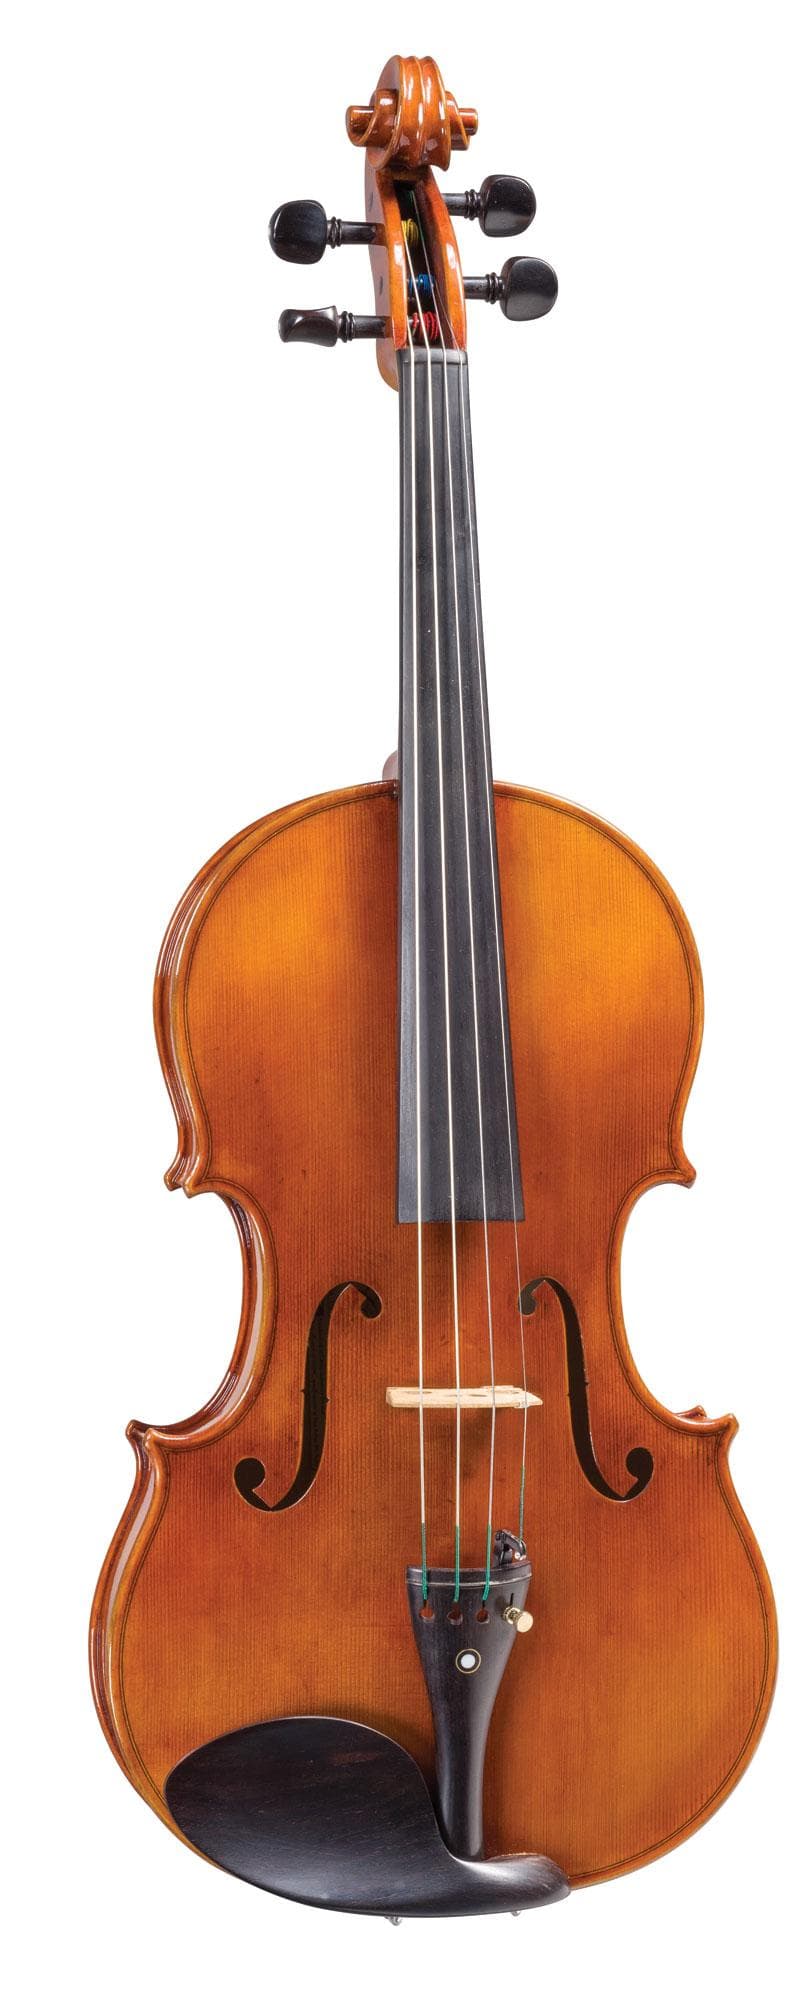 Blemished Carlo Lamberti Classic Viola